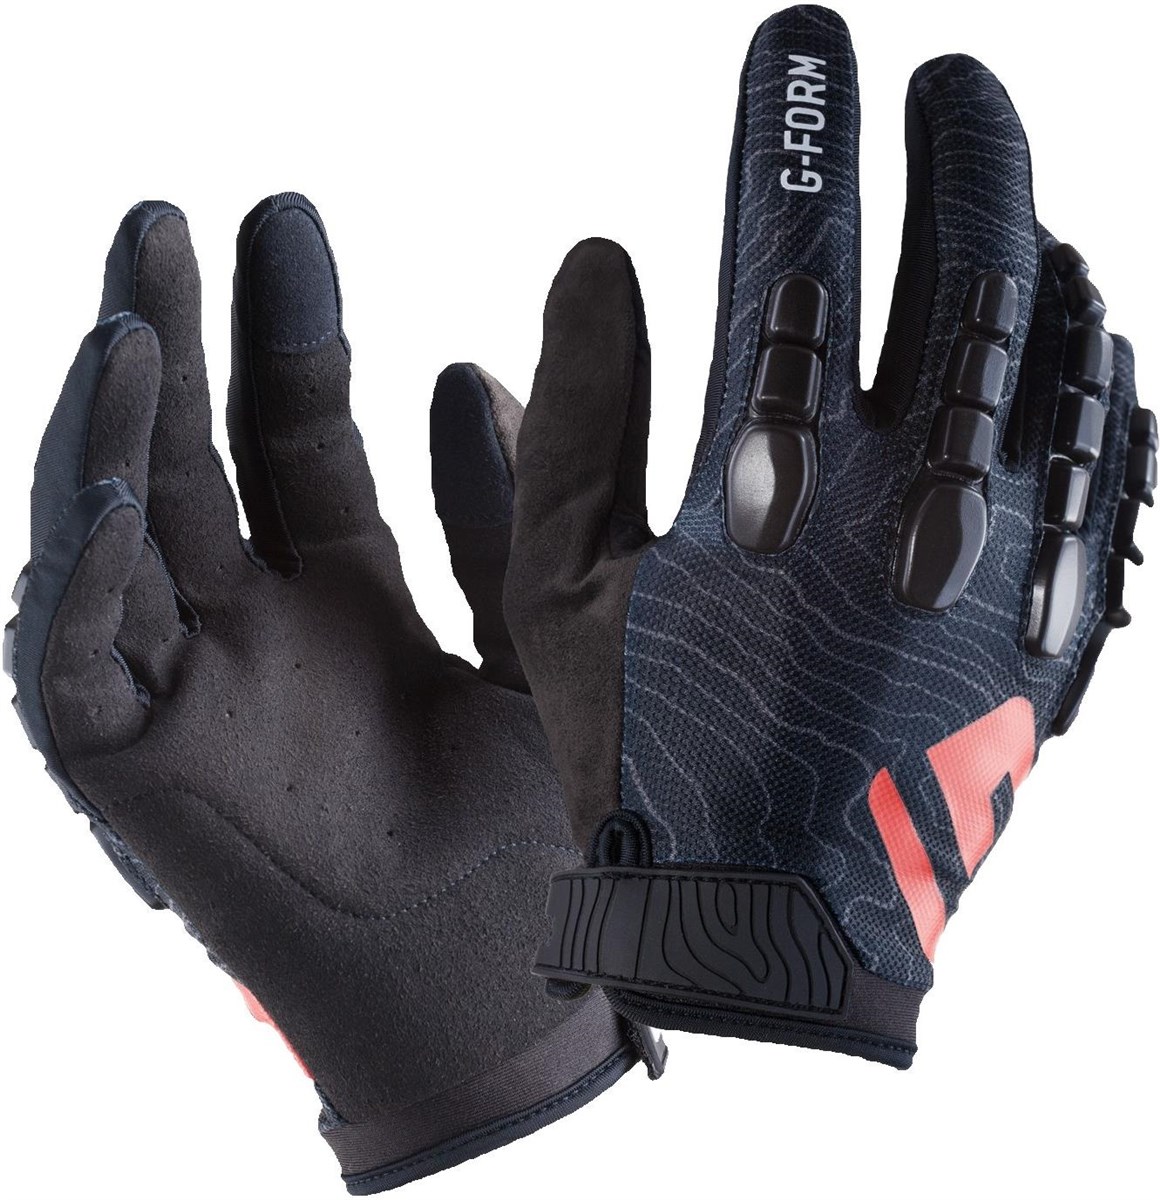 G-Form Pro Trail Long Finger Gloves product image